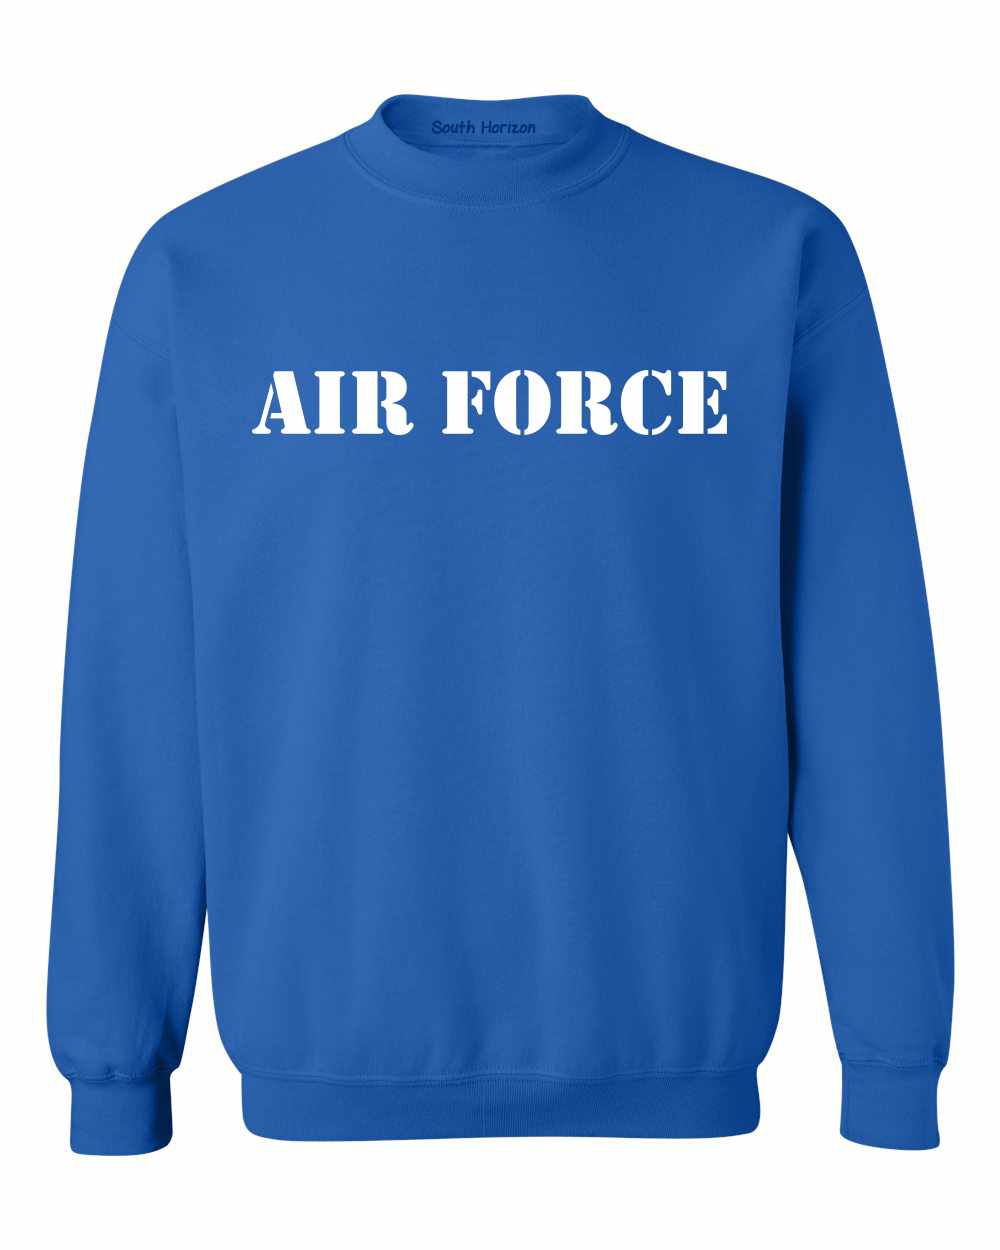 AIR FORCE on SweatShirt